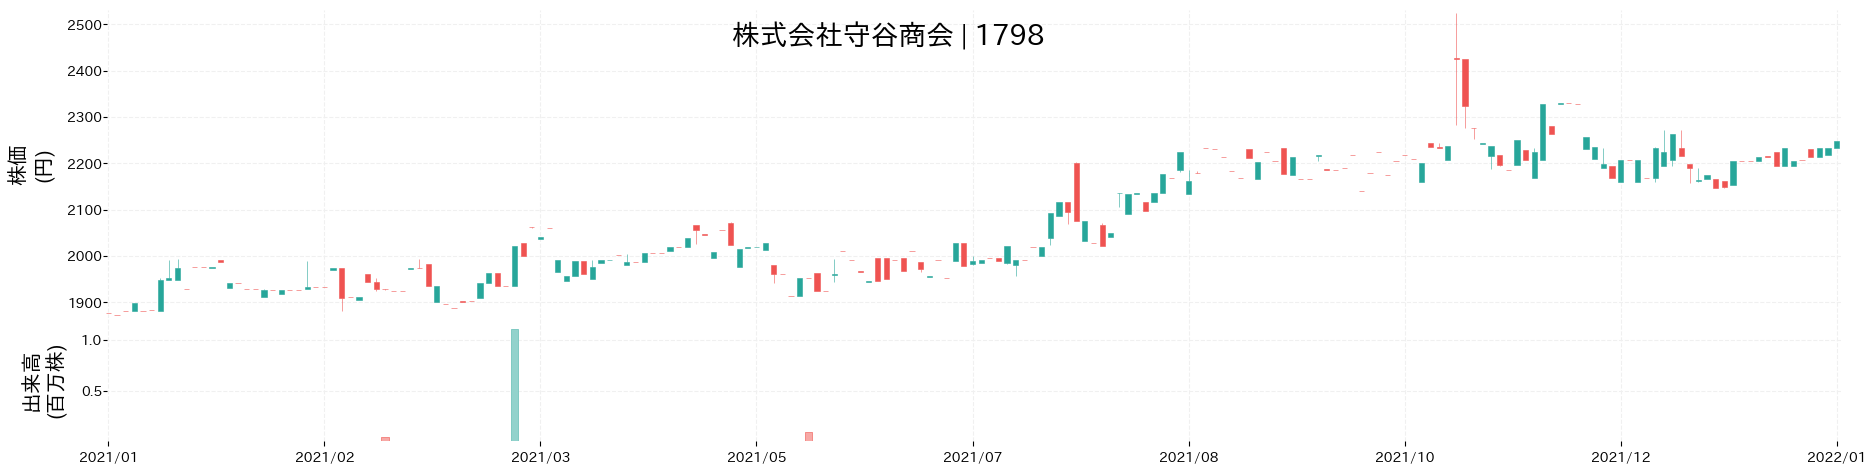 守谷商会の株価推移(2021)